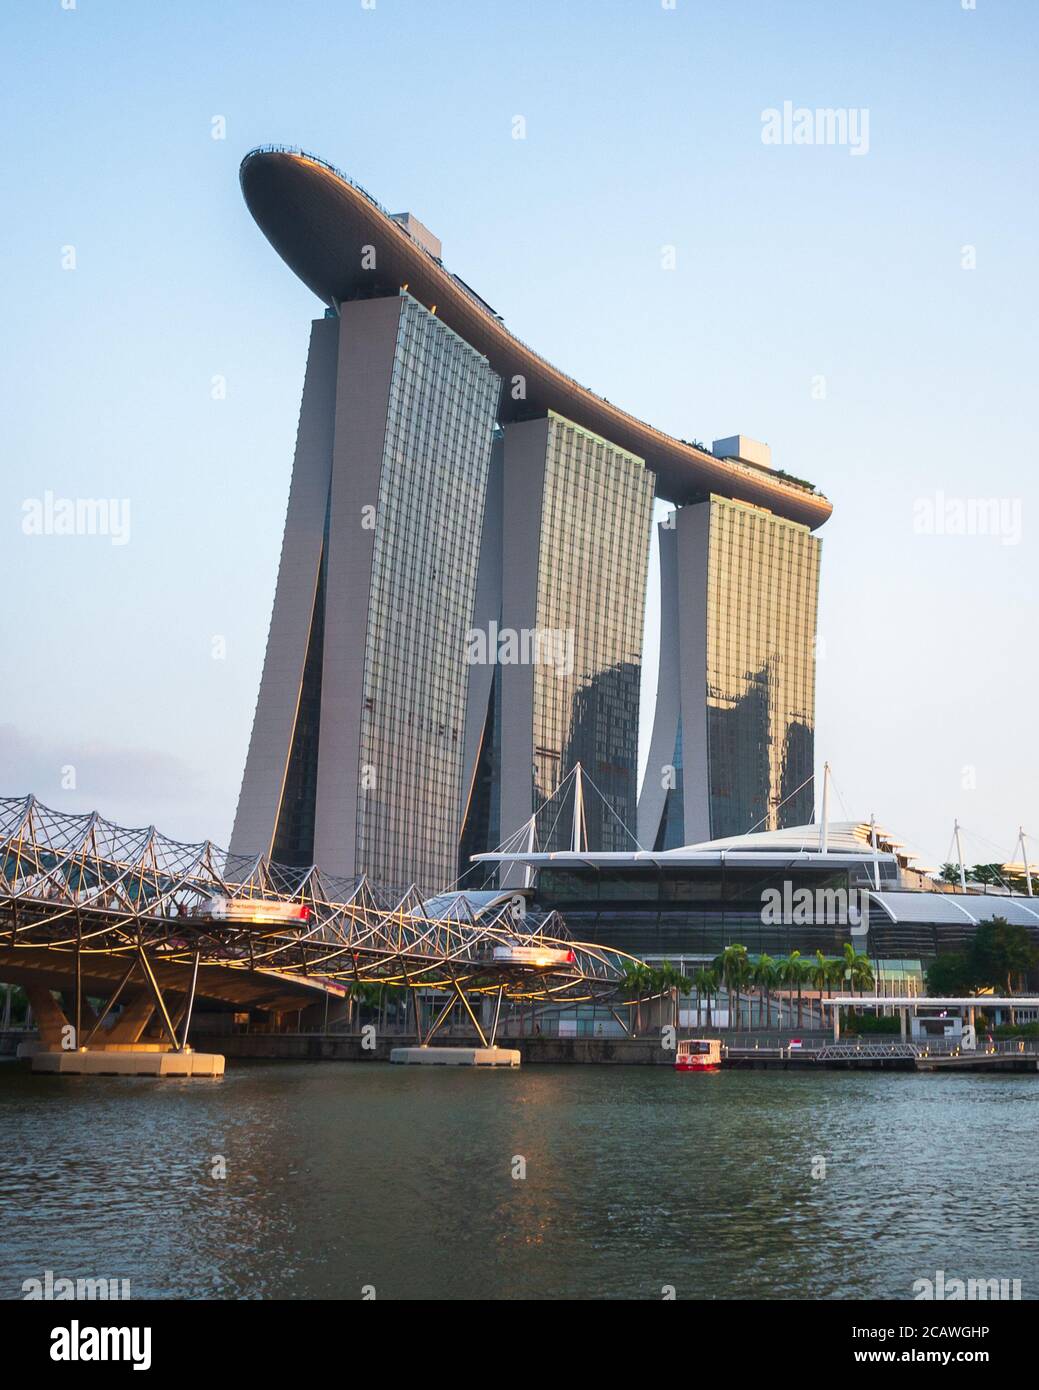 Singapur - 09. November 2020: Singapur ikonische Skyline, mit dem Sands Resort, dem ArtScience Museum, dem Central Business District. Stockfoto